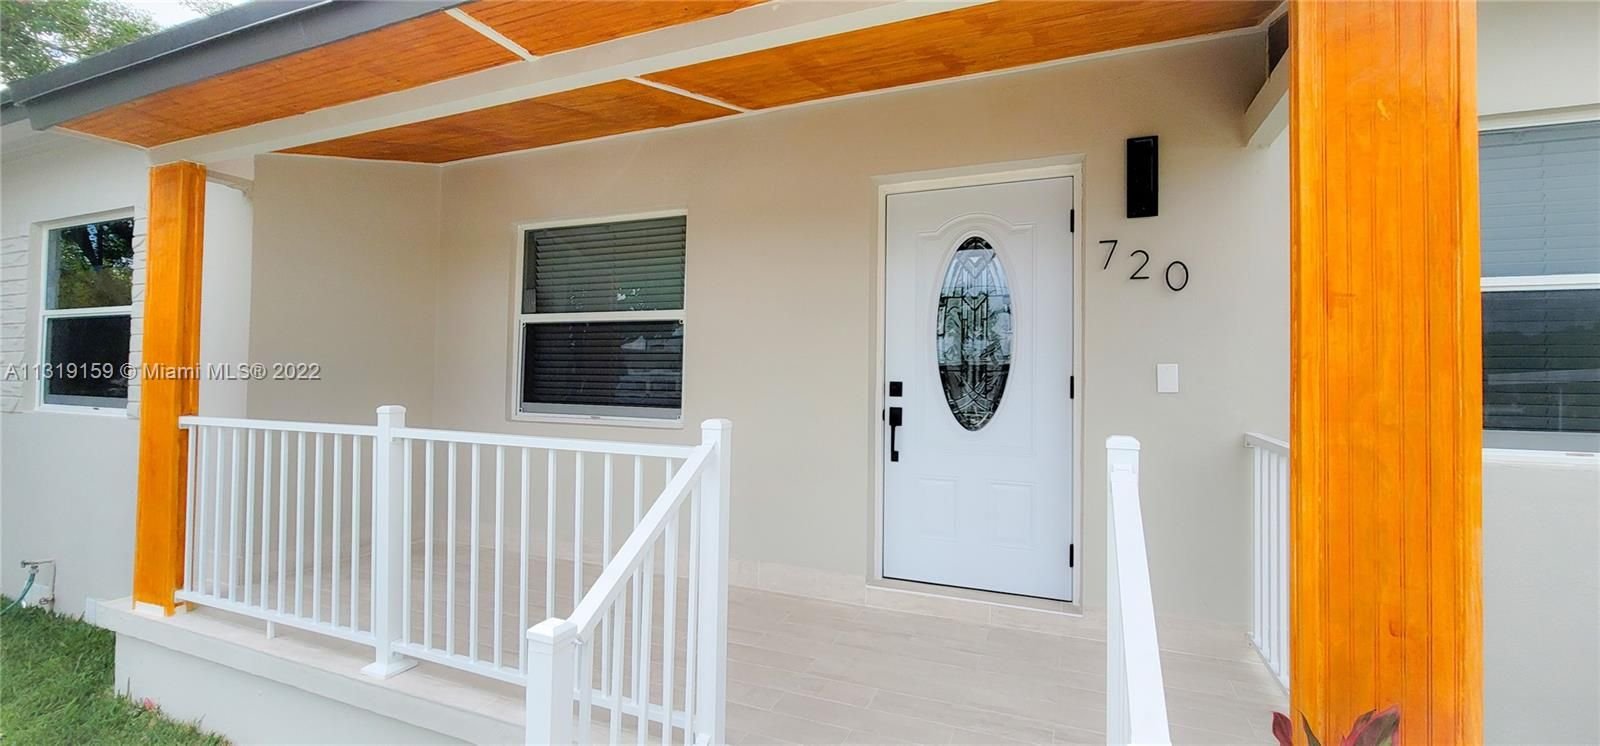 Real estate property located at 720 60th Ave, Miami-Dade County, Miami, FL